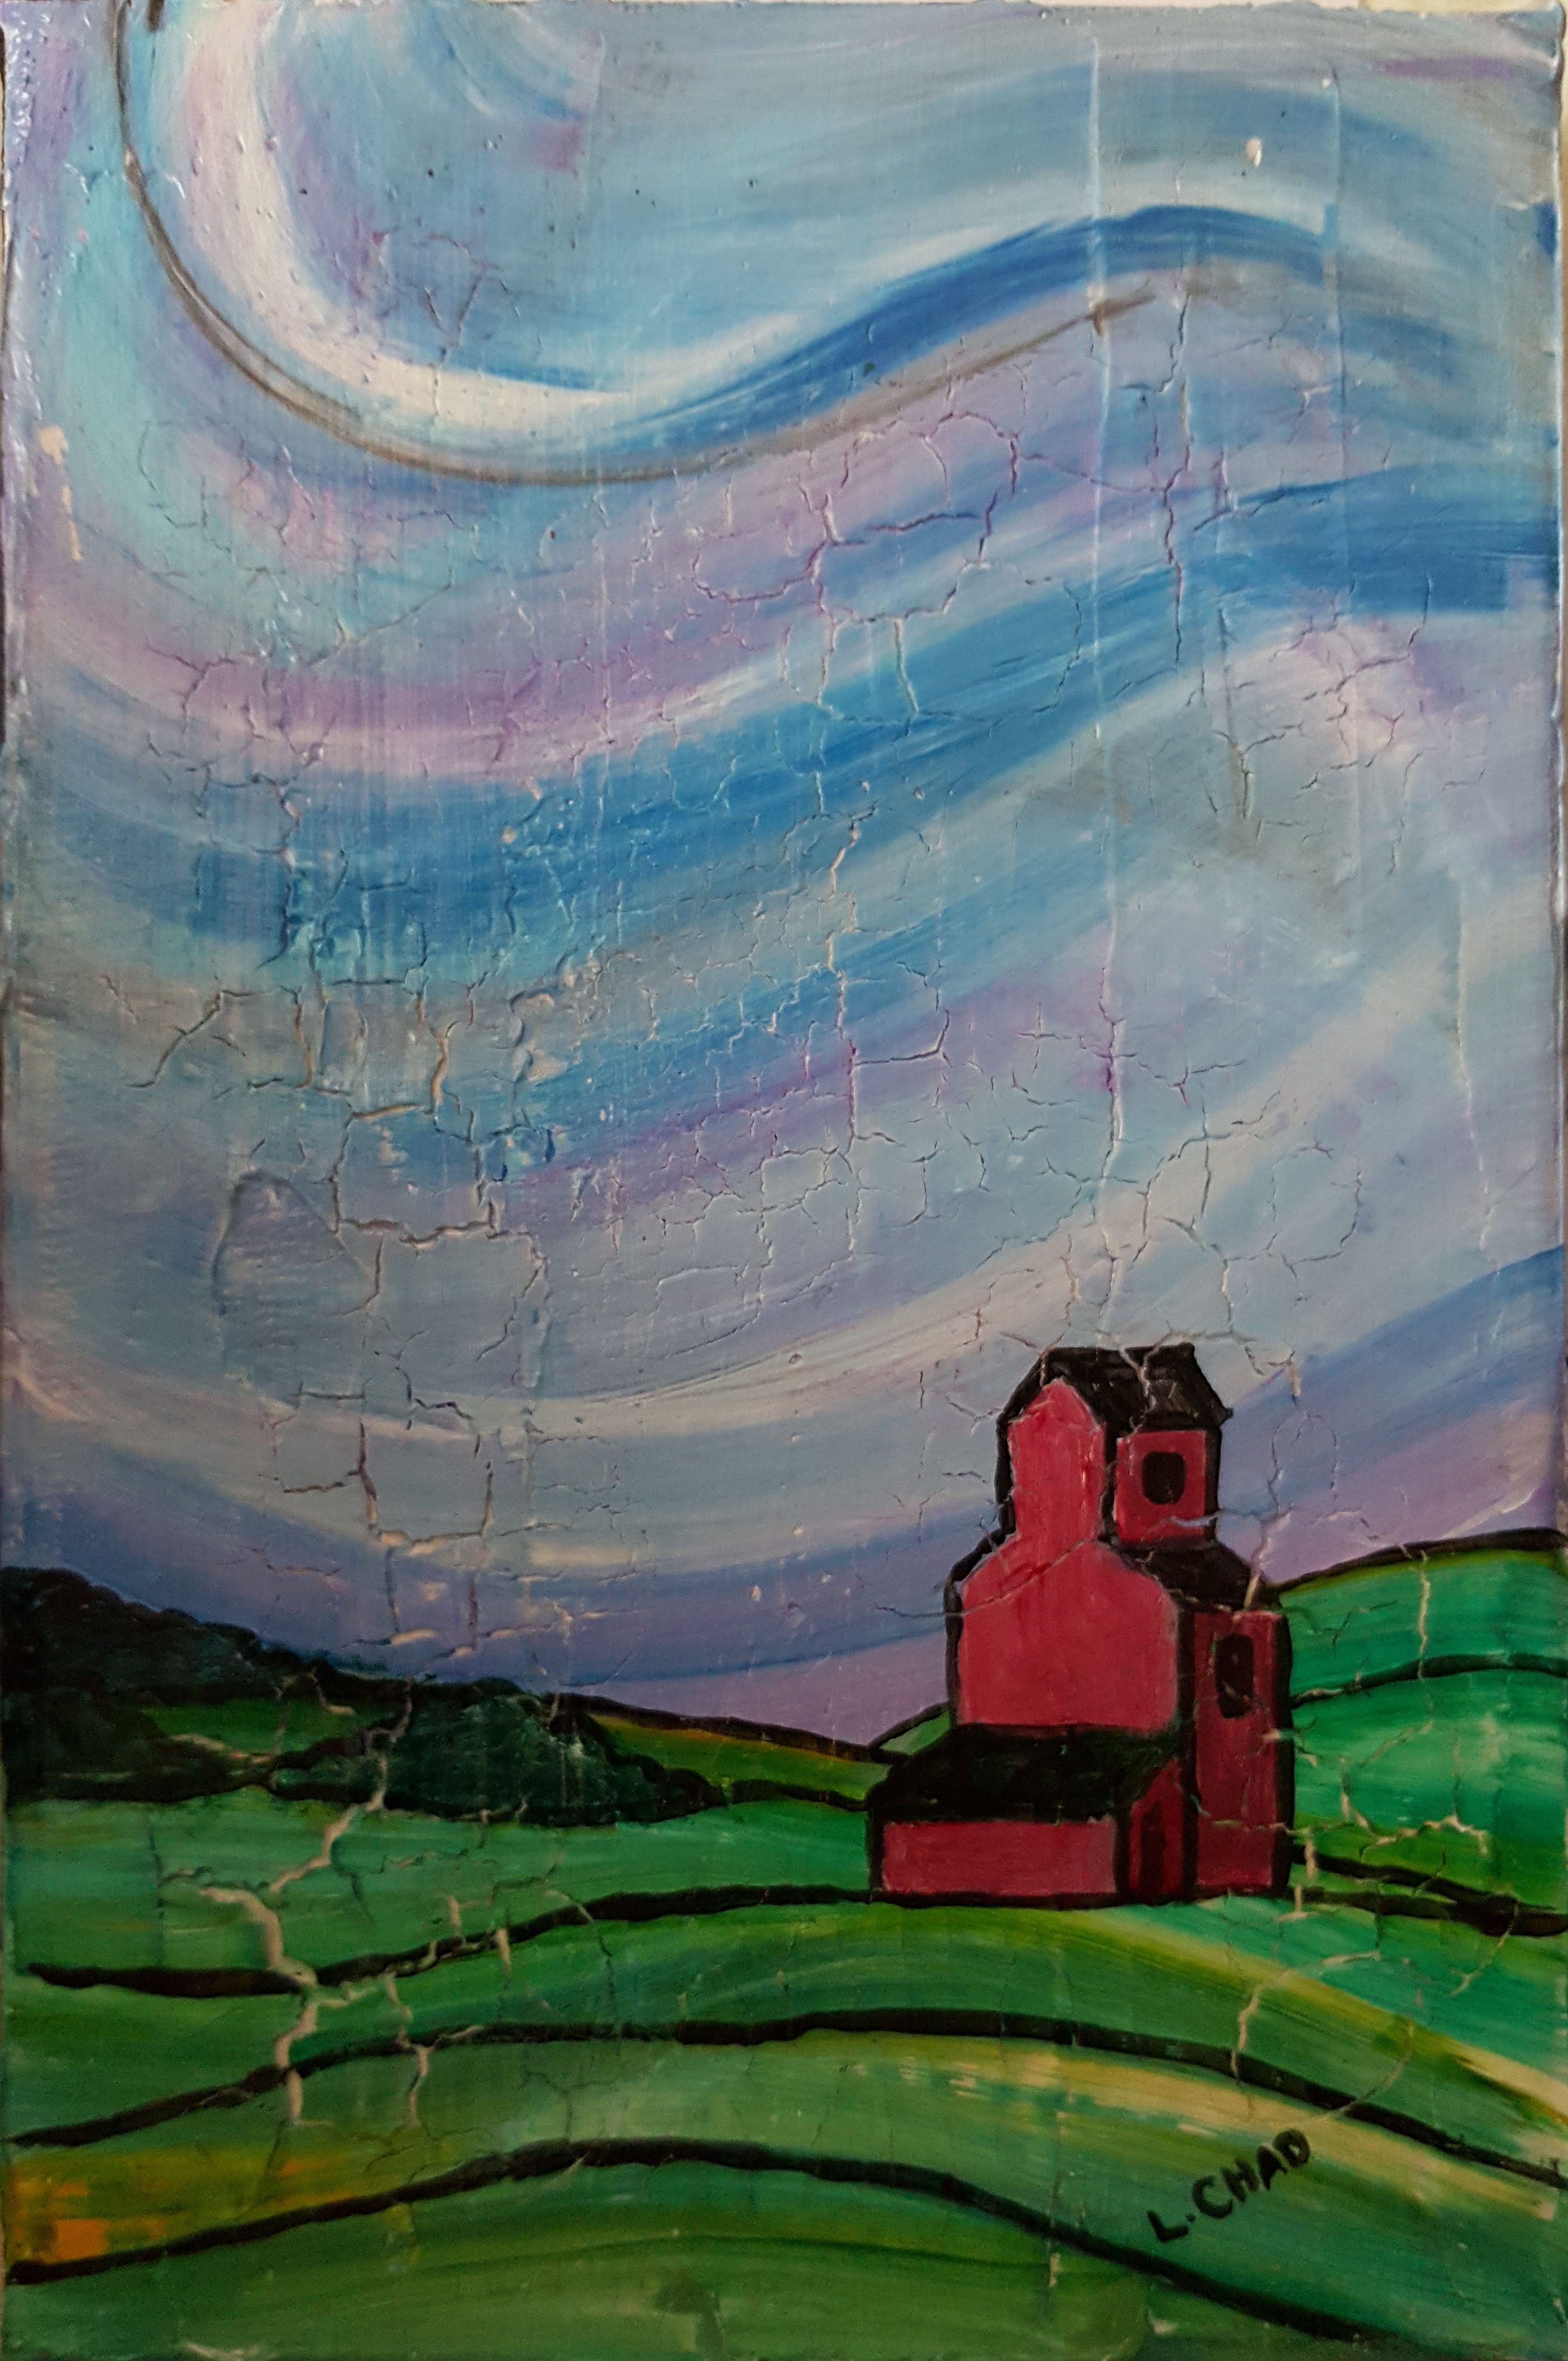 "Prairie Distance" [2015]
Acrylic on canvas. 7" x 4.75" (unframed on easel)
SOLD
